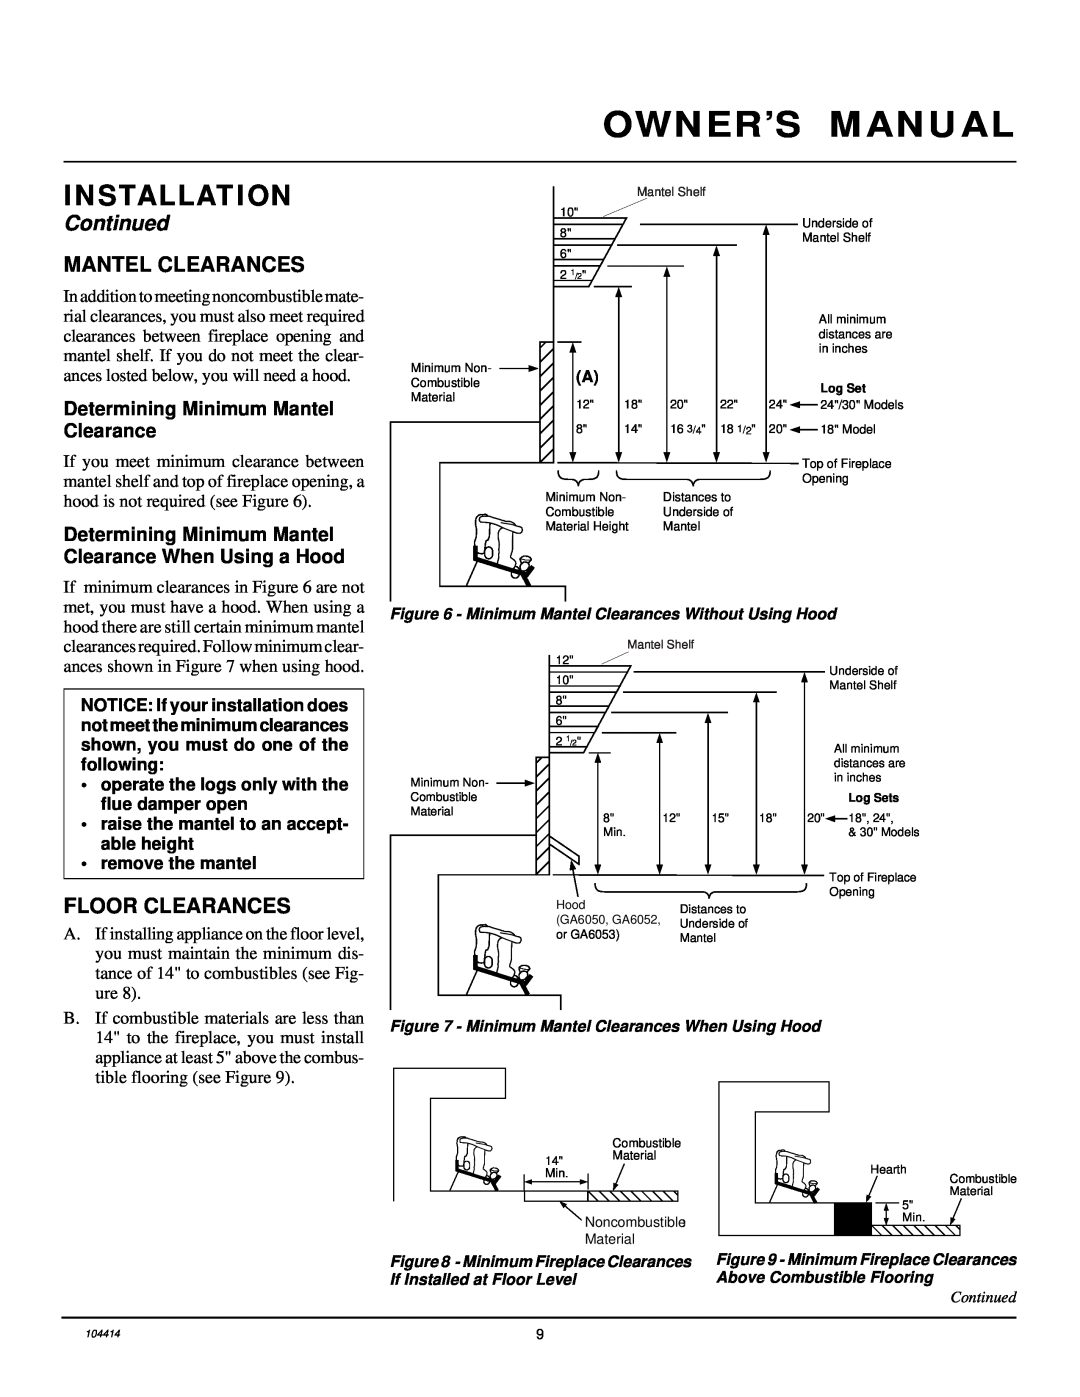 Desa CFS24NVC VS30N, B, C installation manual Mantel Clearances, Floor Clearances, Installation, Continued 